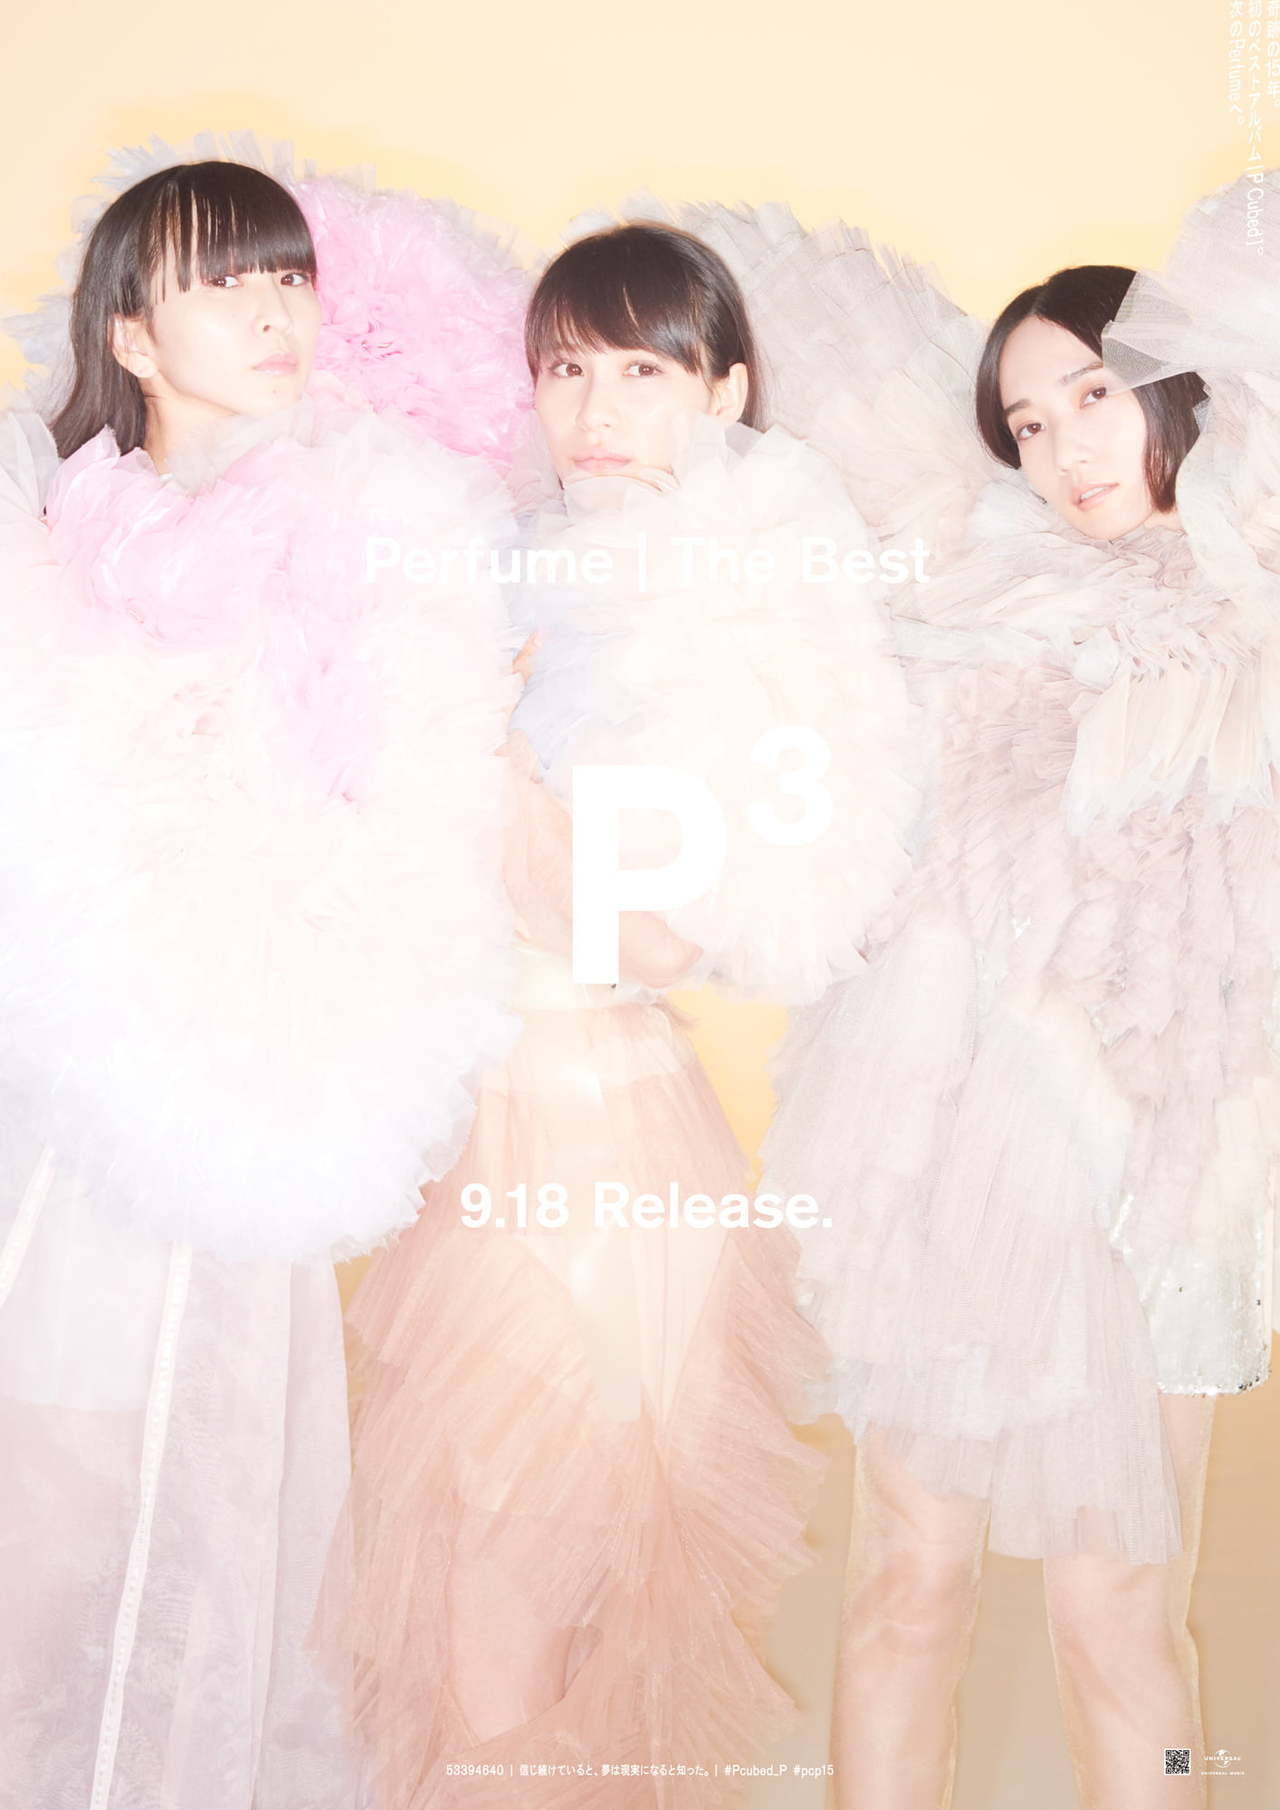 kimono beat — taopriest: Perfume The Best P Cubed Poster 14 -...